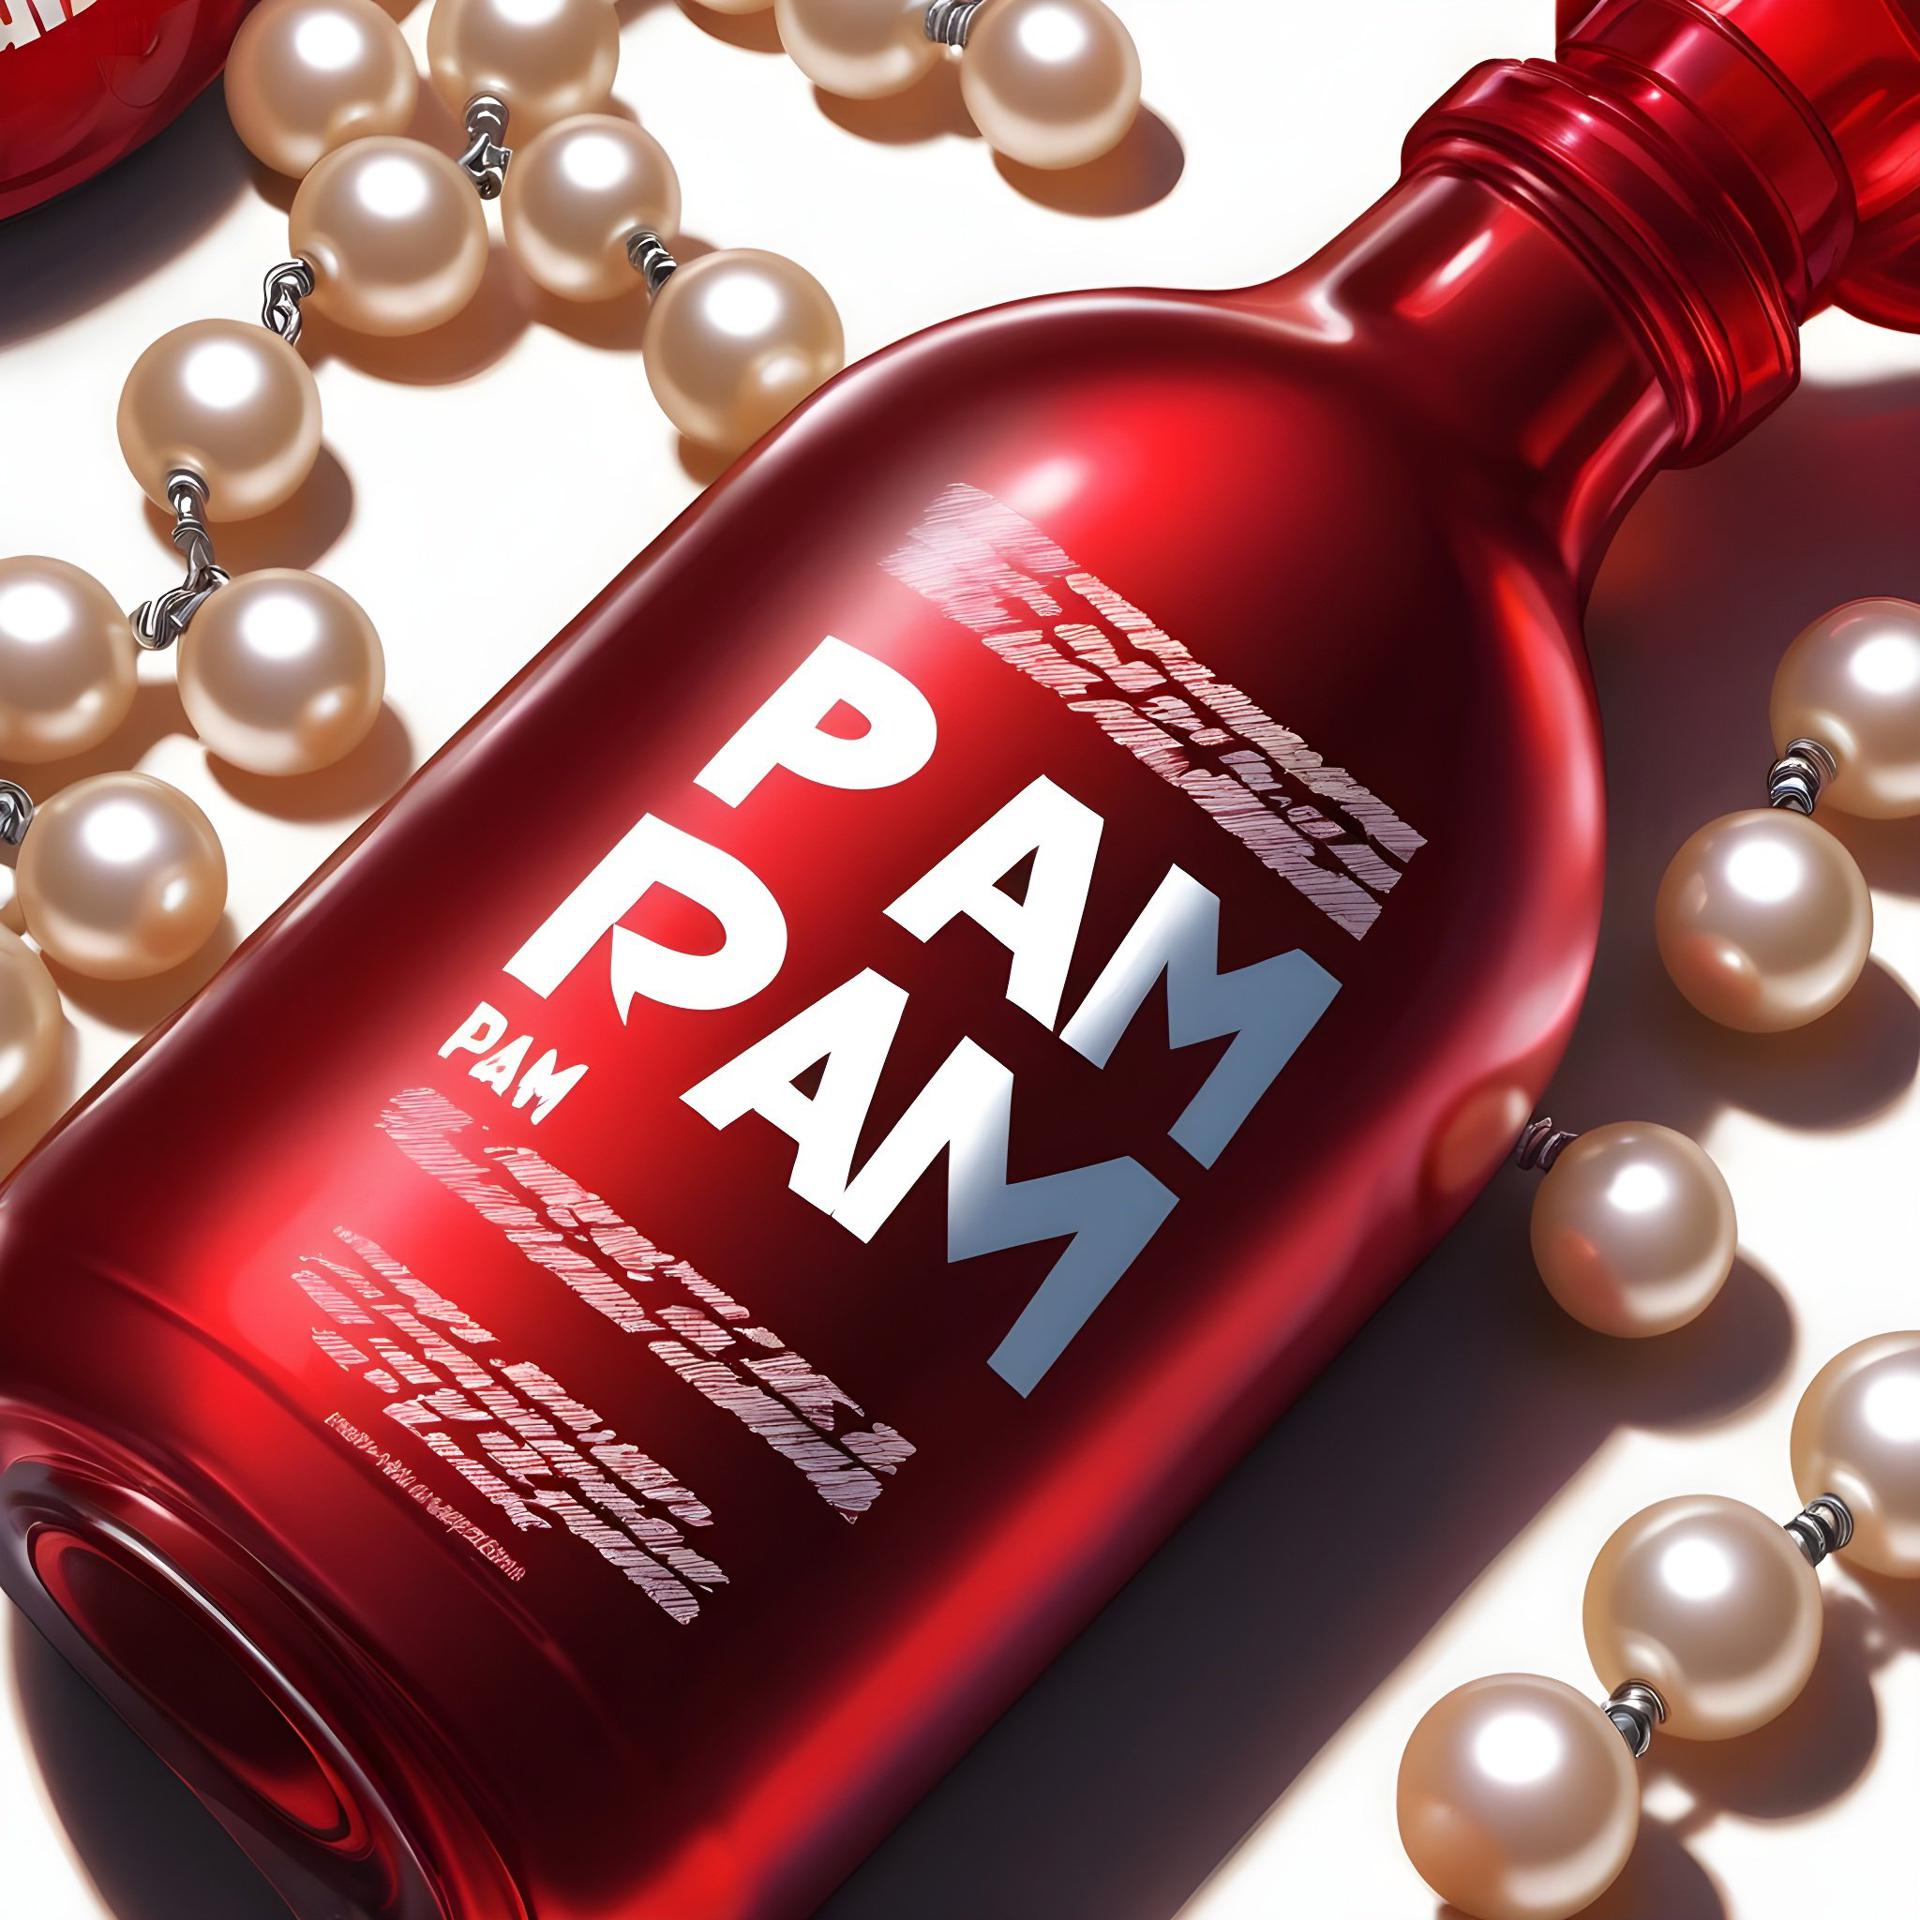 Постер альбома Ram Pam Pam